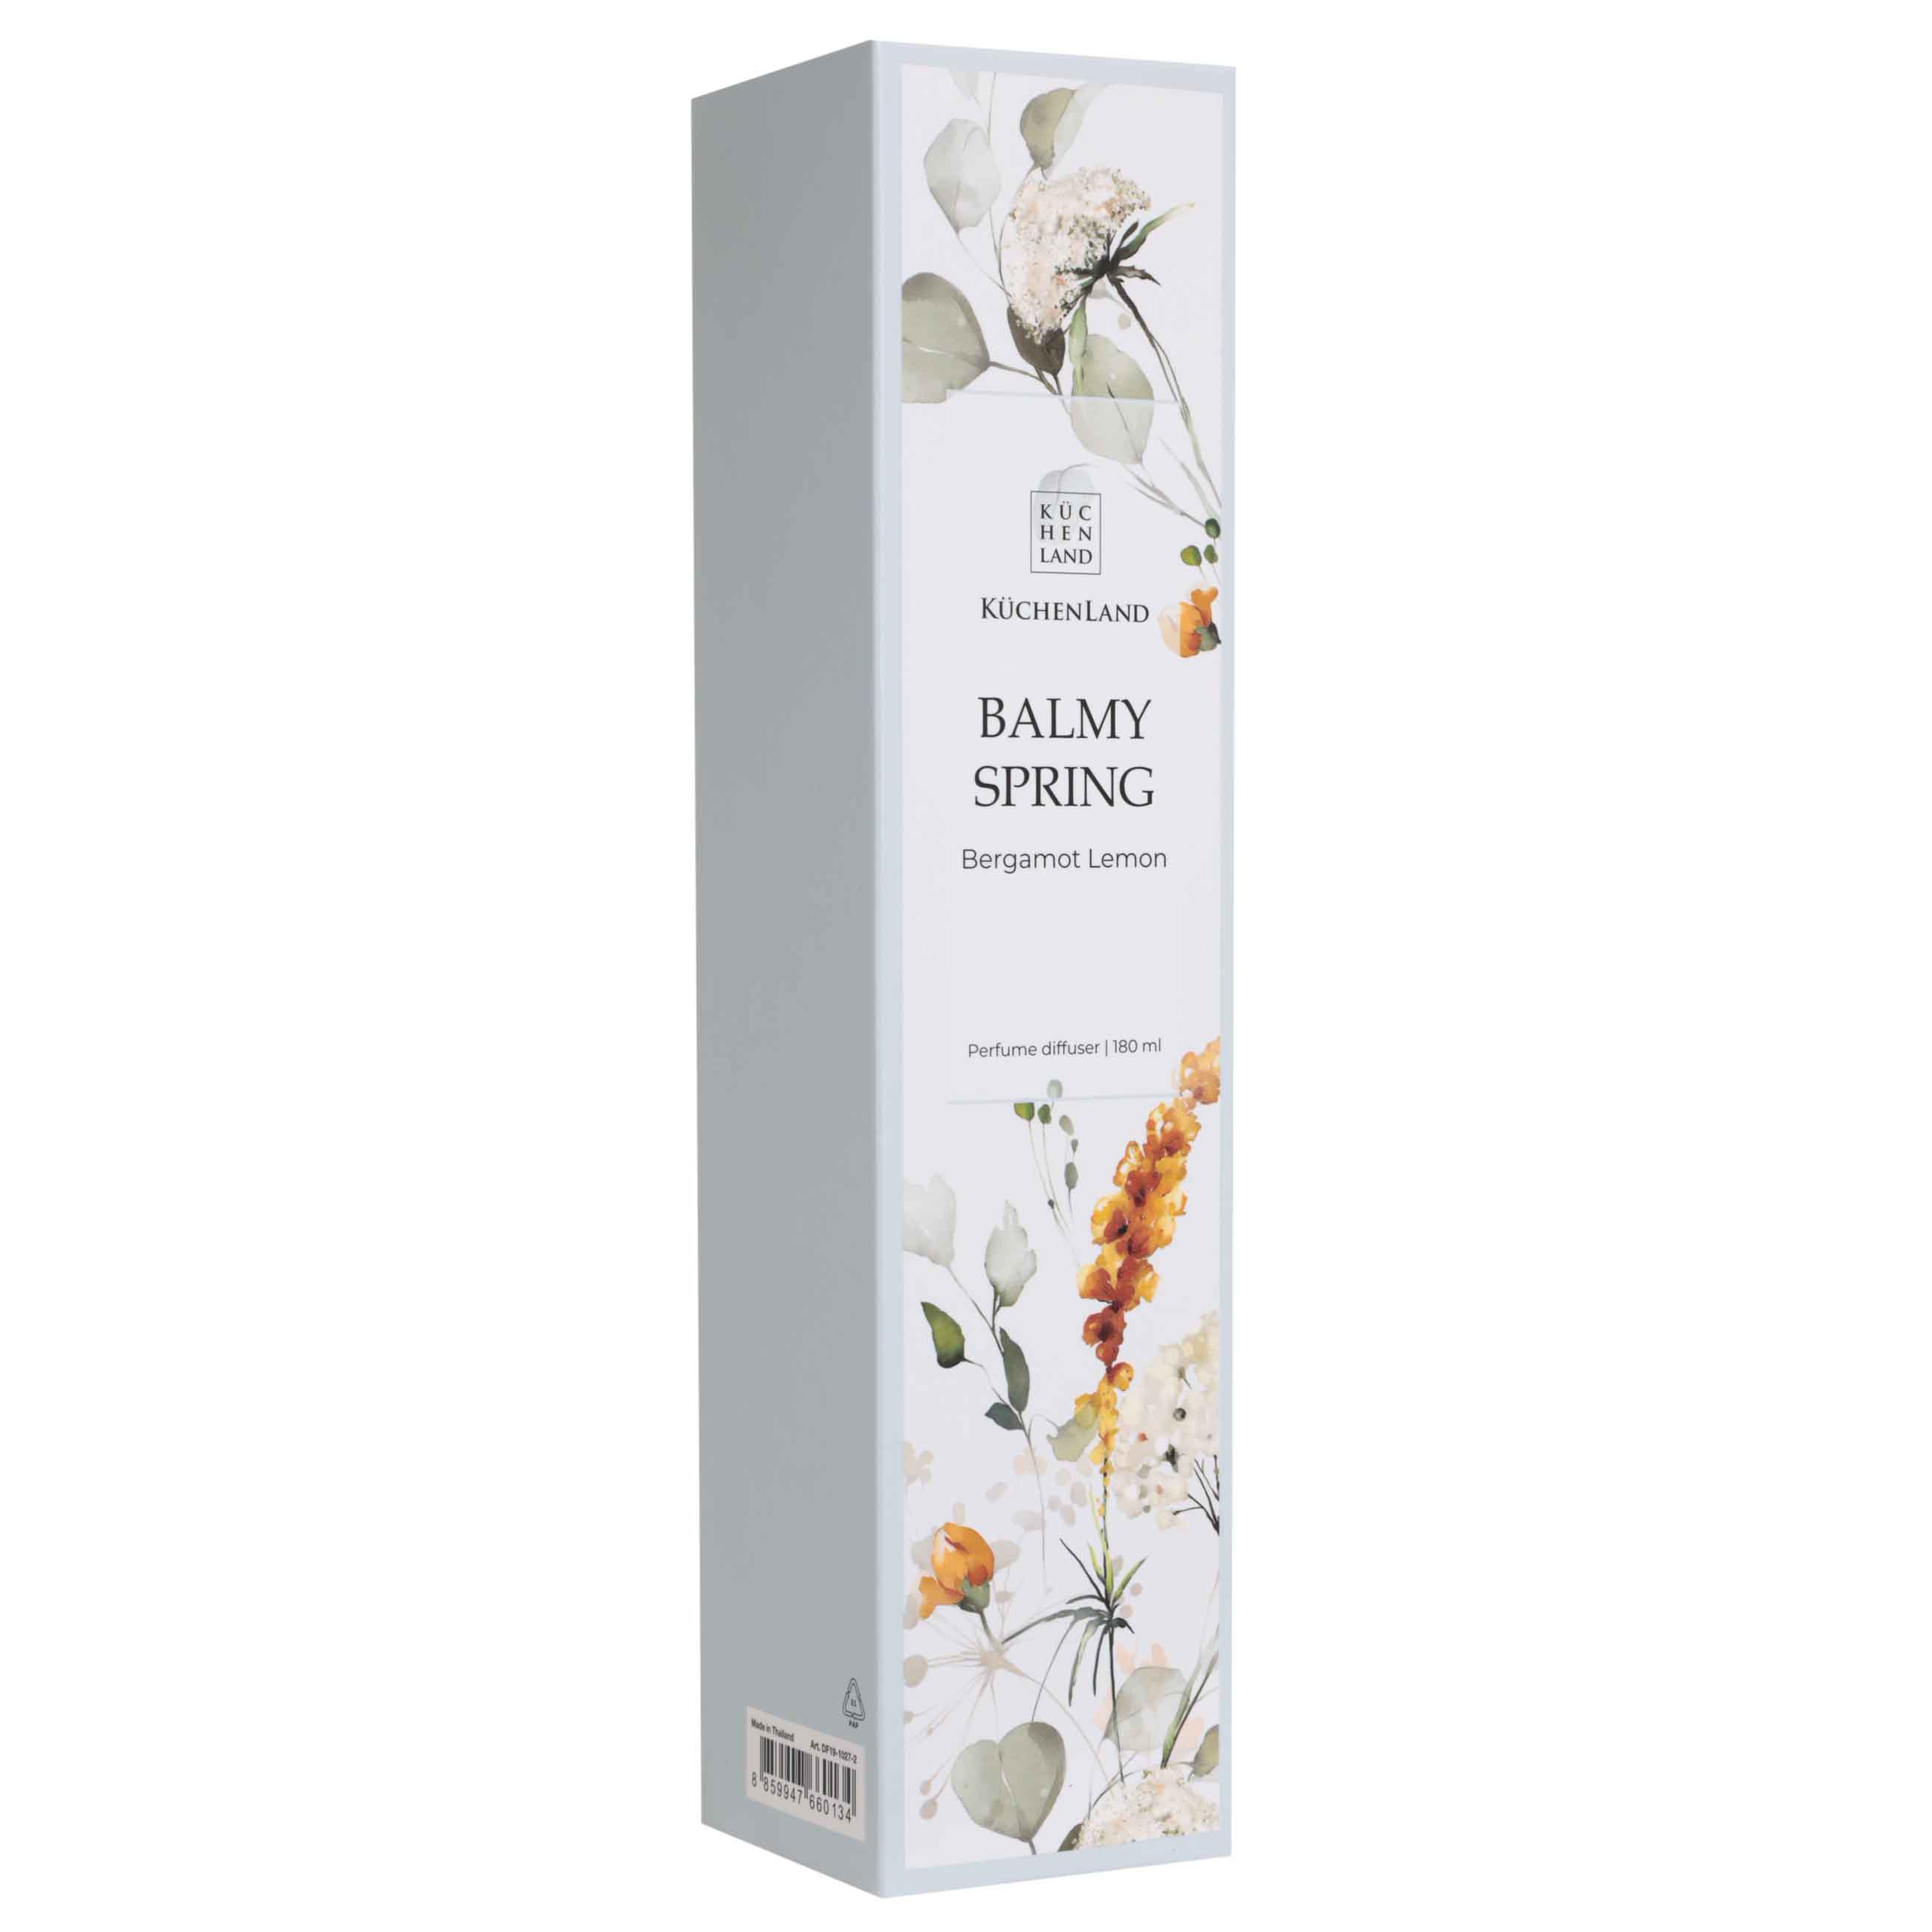 Perfume diffuser, 180 ml, with dried flowers, Bergamot Lemon, Balmy spring изображение № 2